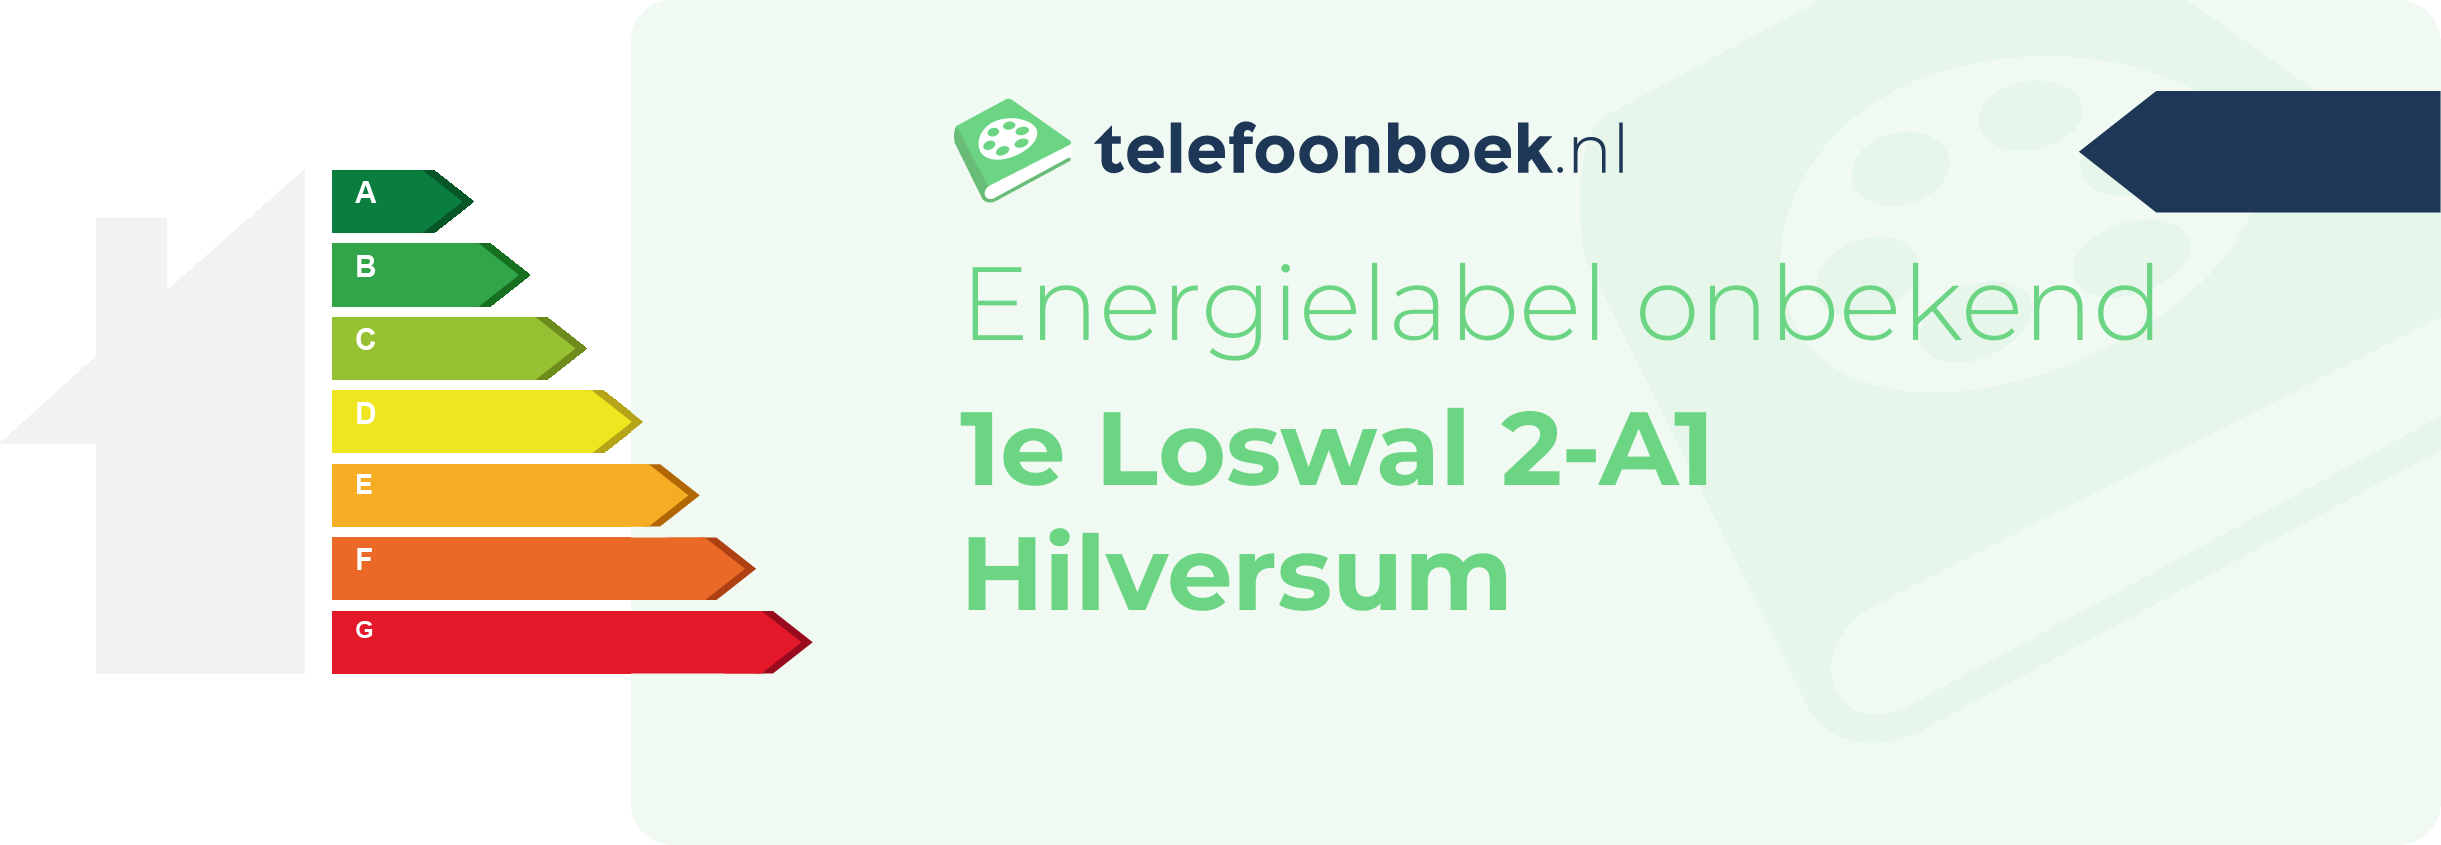 Energielabel 1e Loswal 2-A1 Hilversum